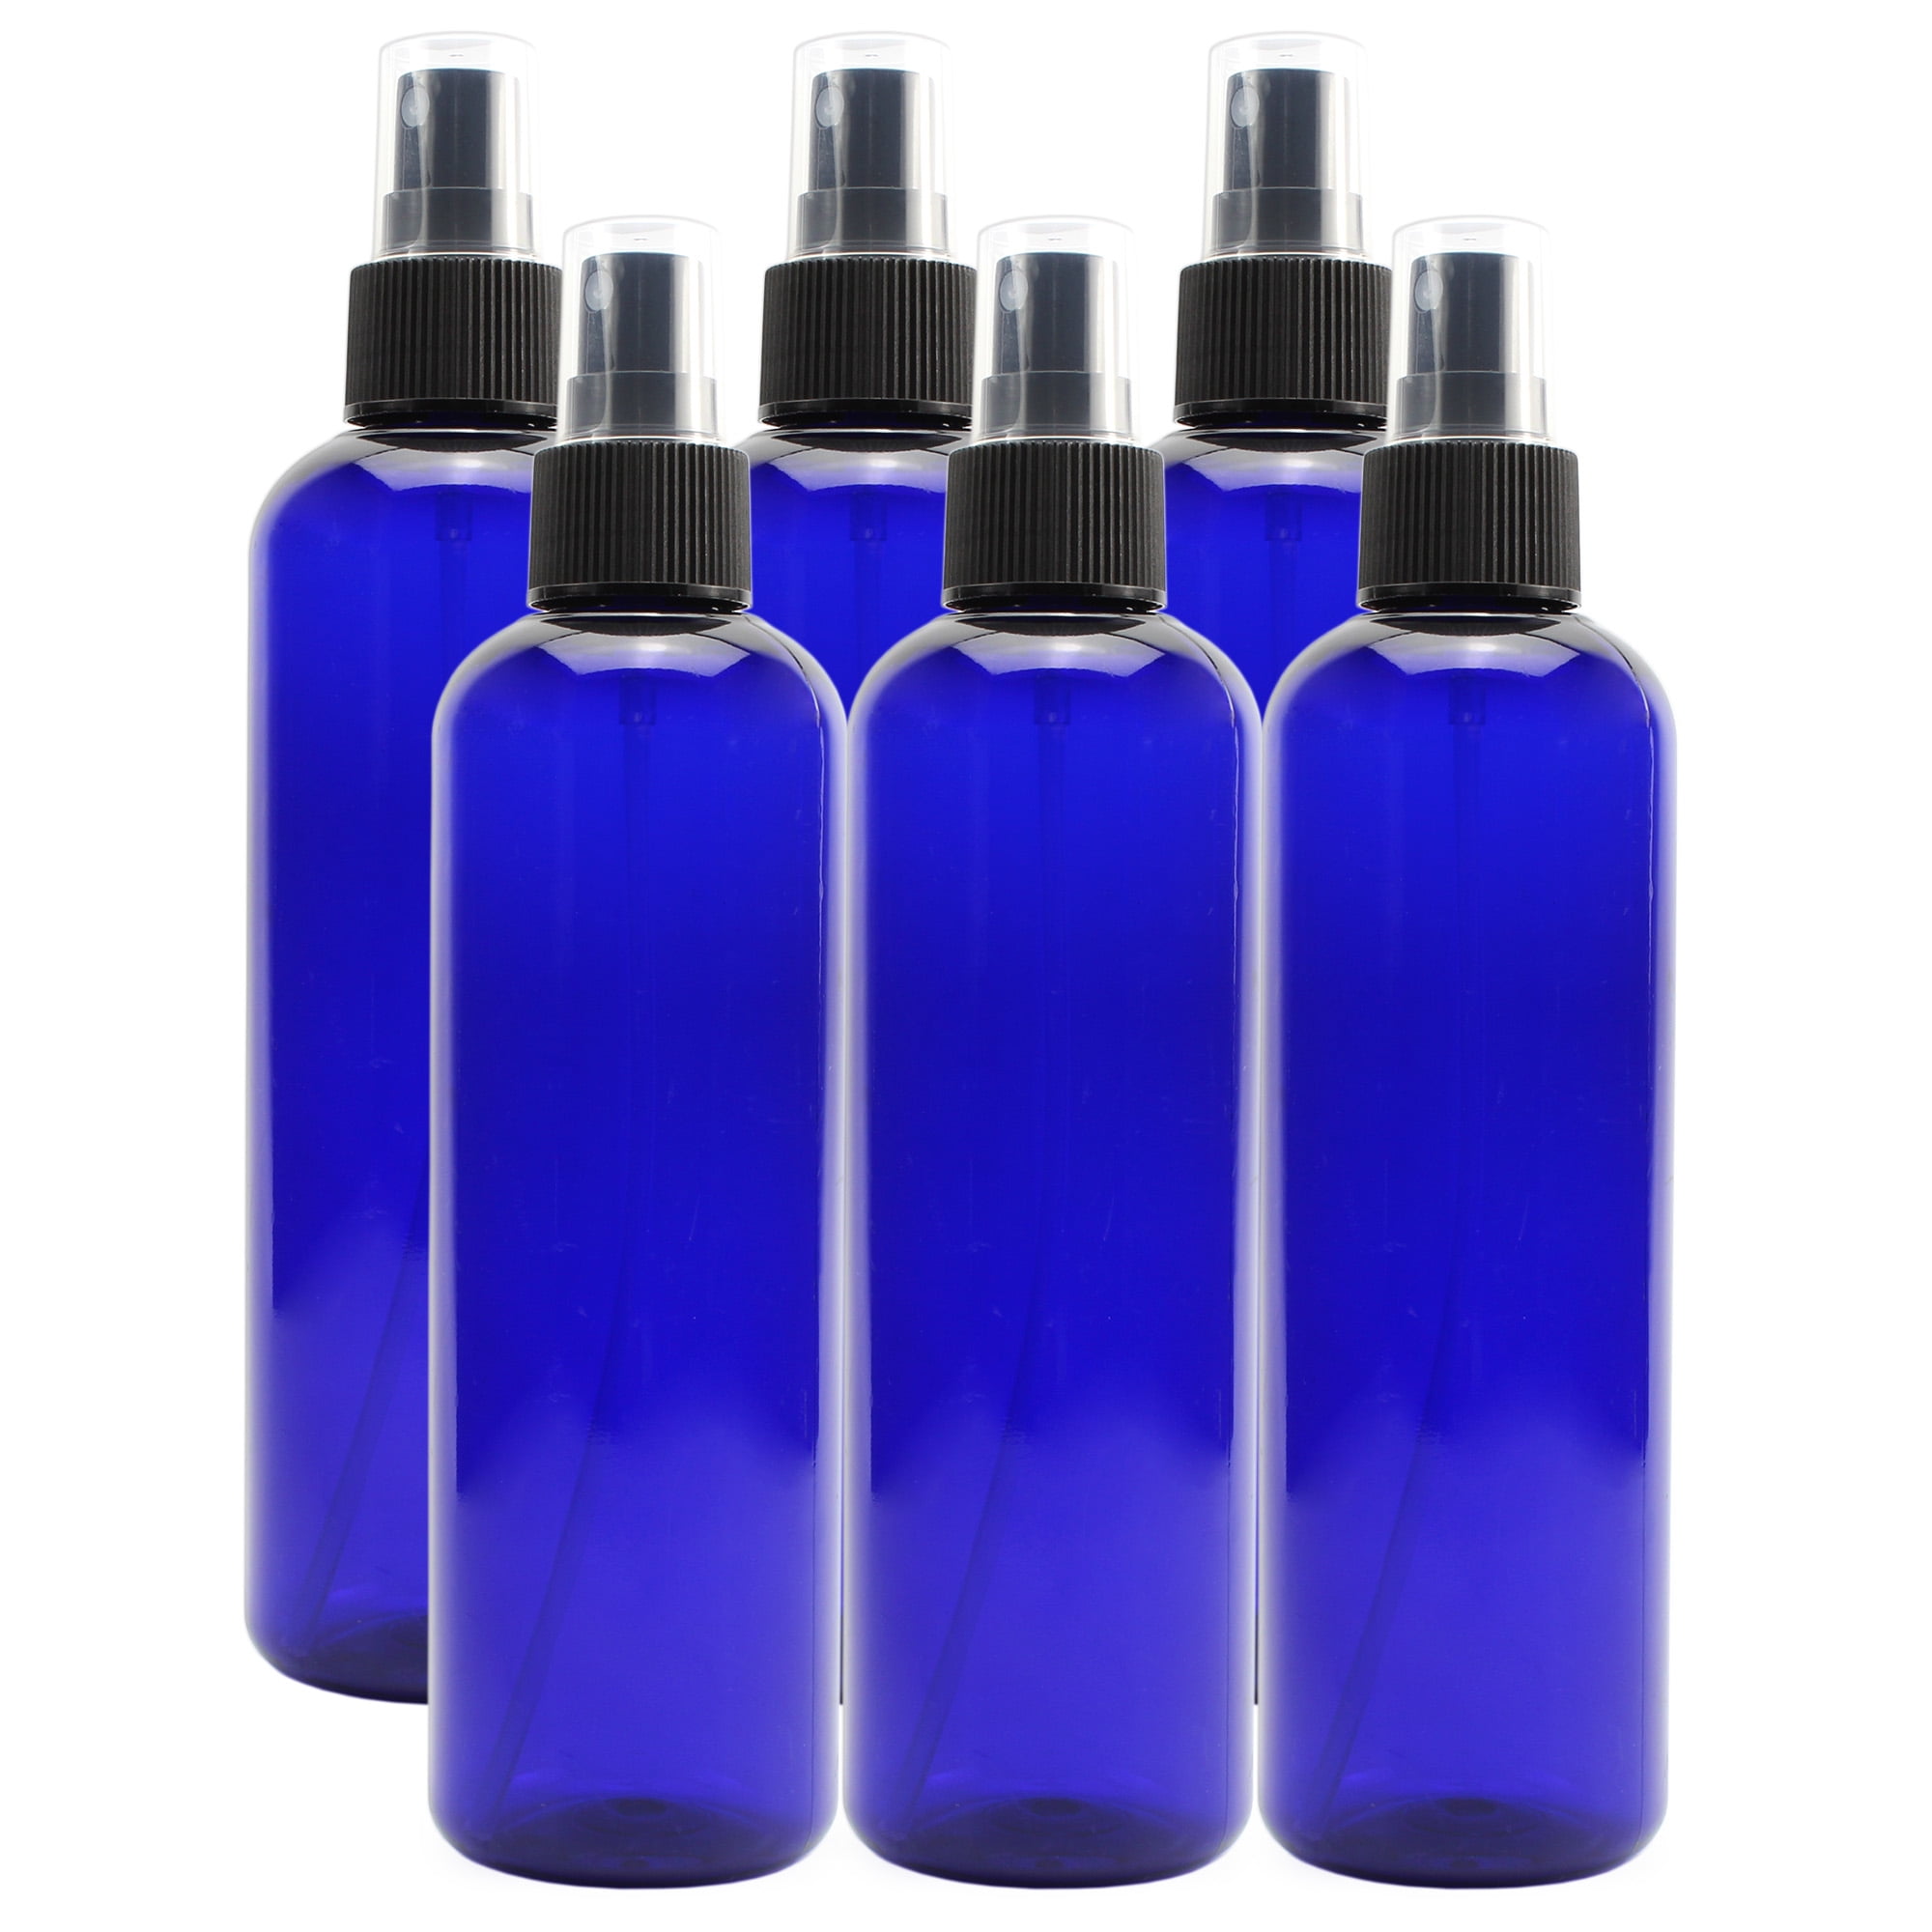 Cornucopia Brands 8-Ounce Aluminum Fine Mist Spray Bottles (4-Pack); Large Metal Atomizer Bottles Hold 8-10oz